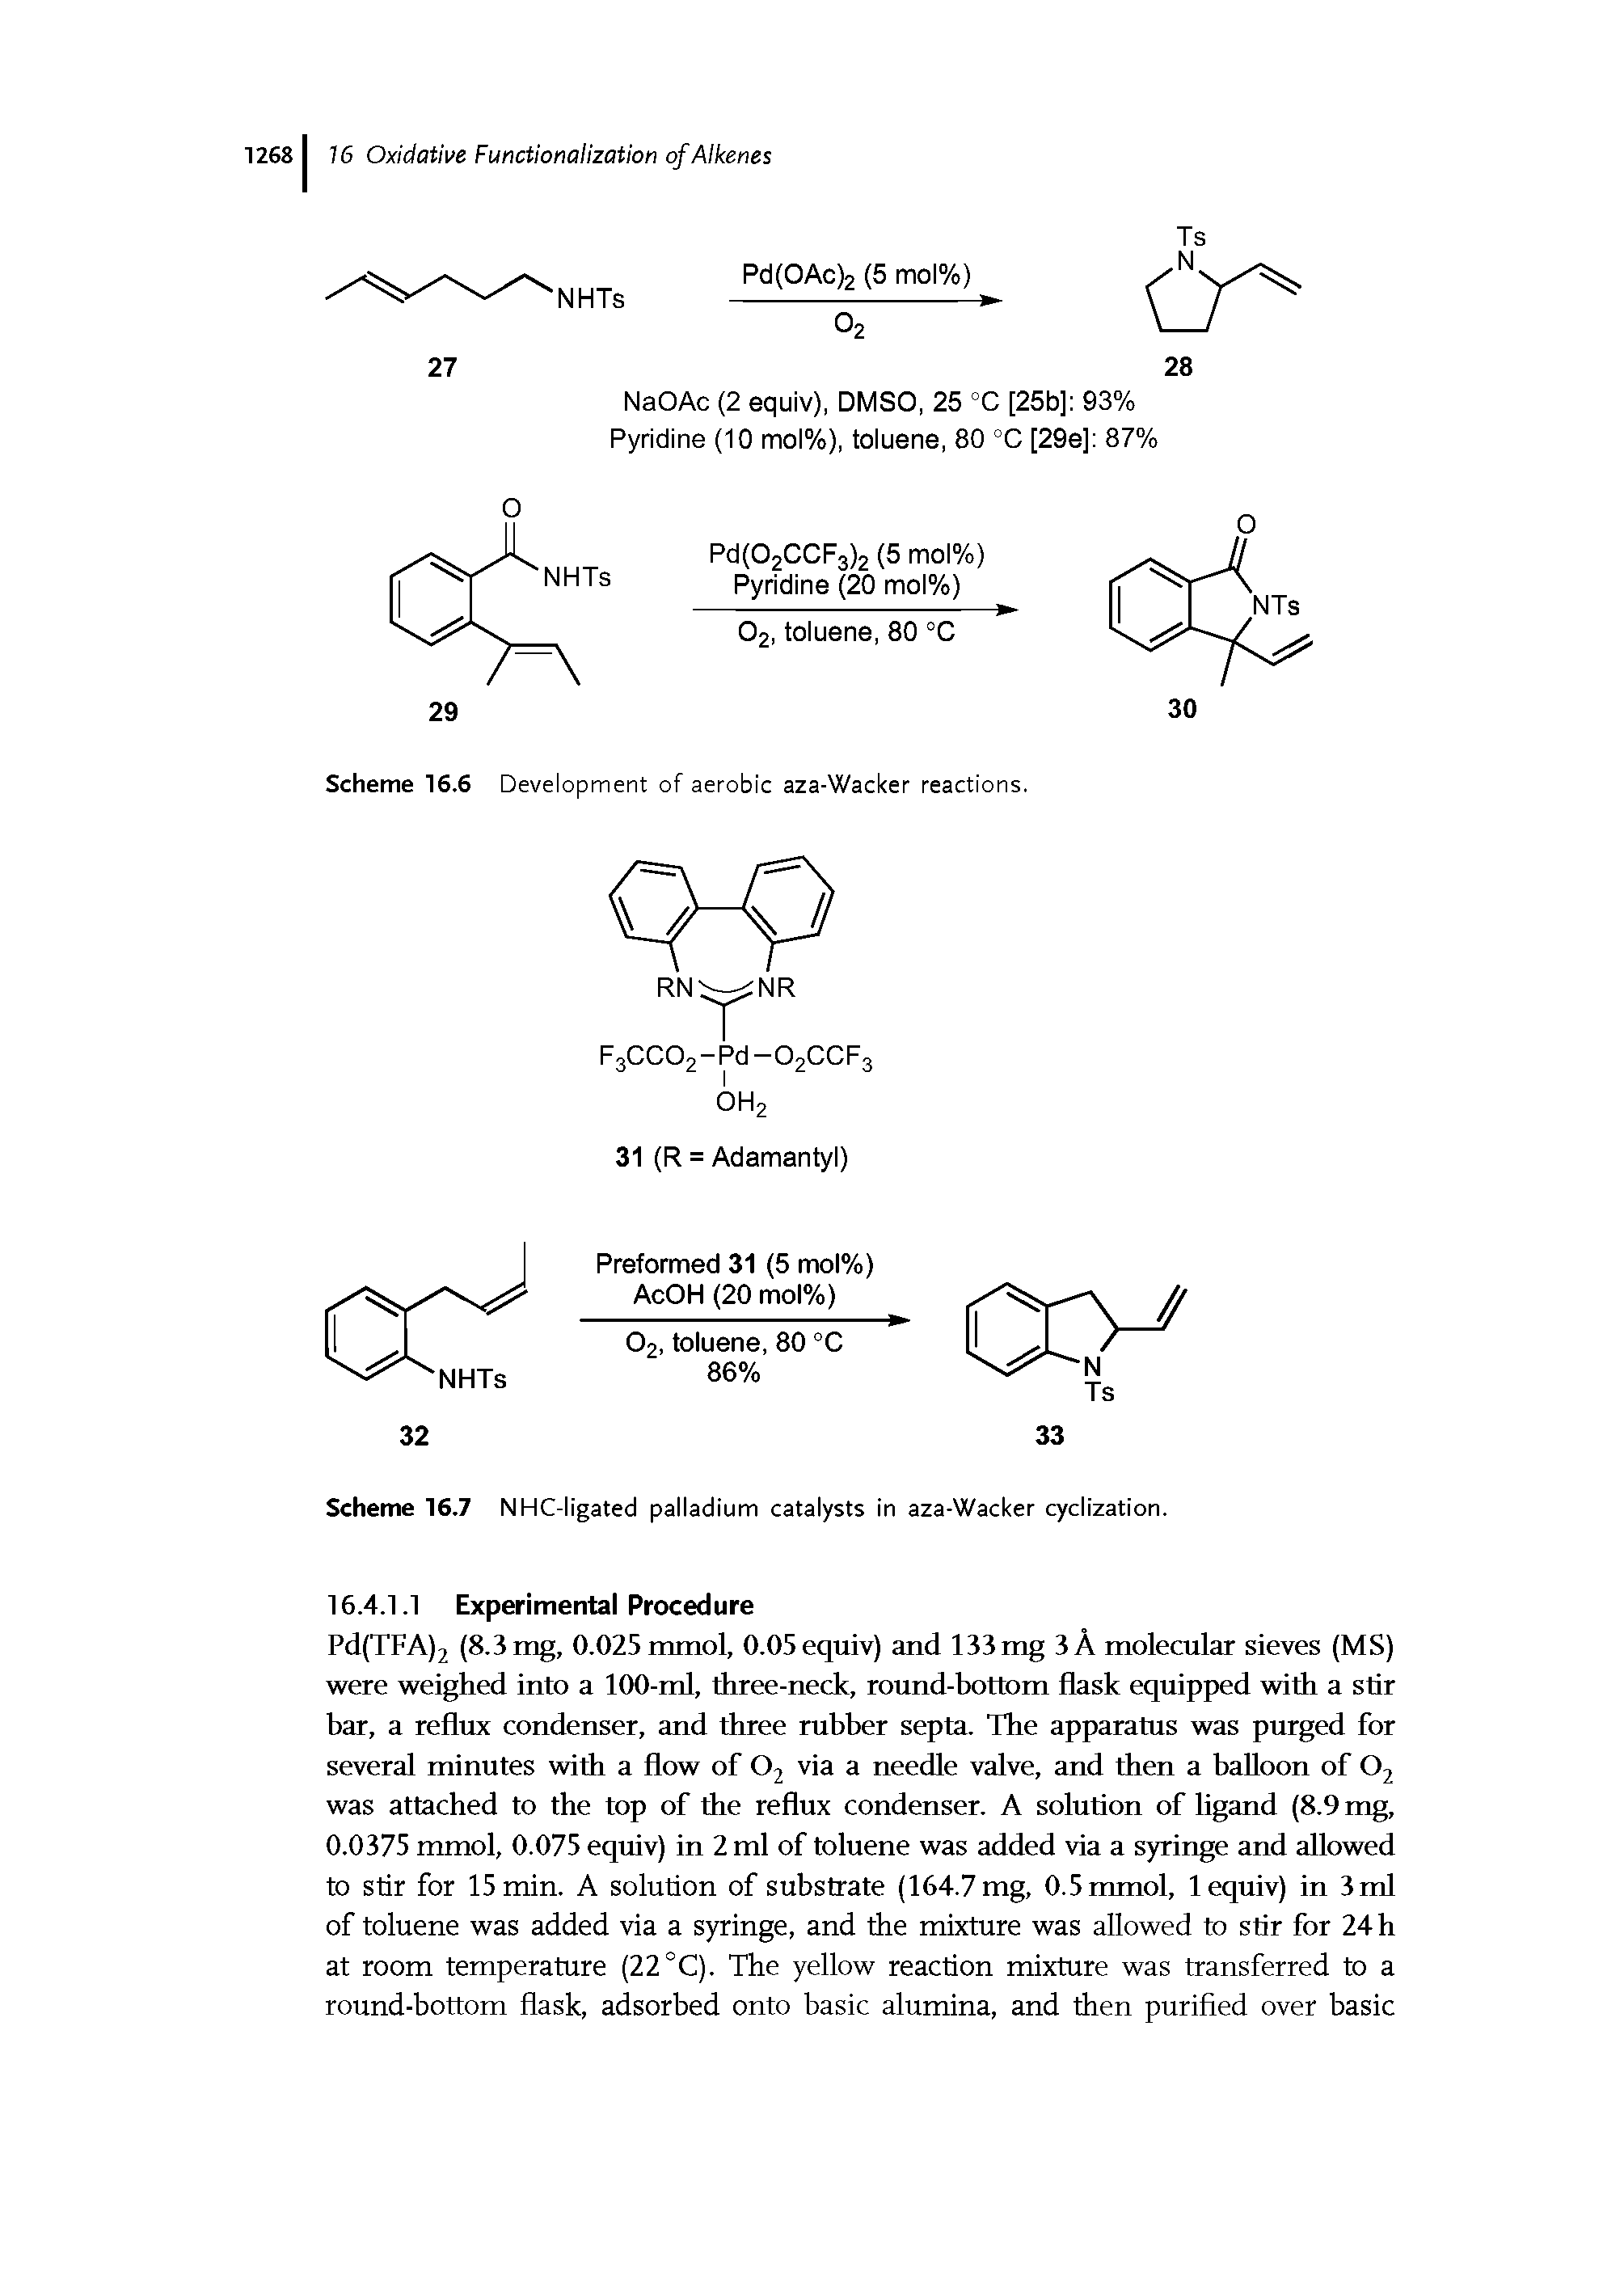 Scheme 16.7 NHC-ligated palladium catalysts in aza-Wacker cyclization.